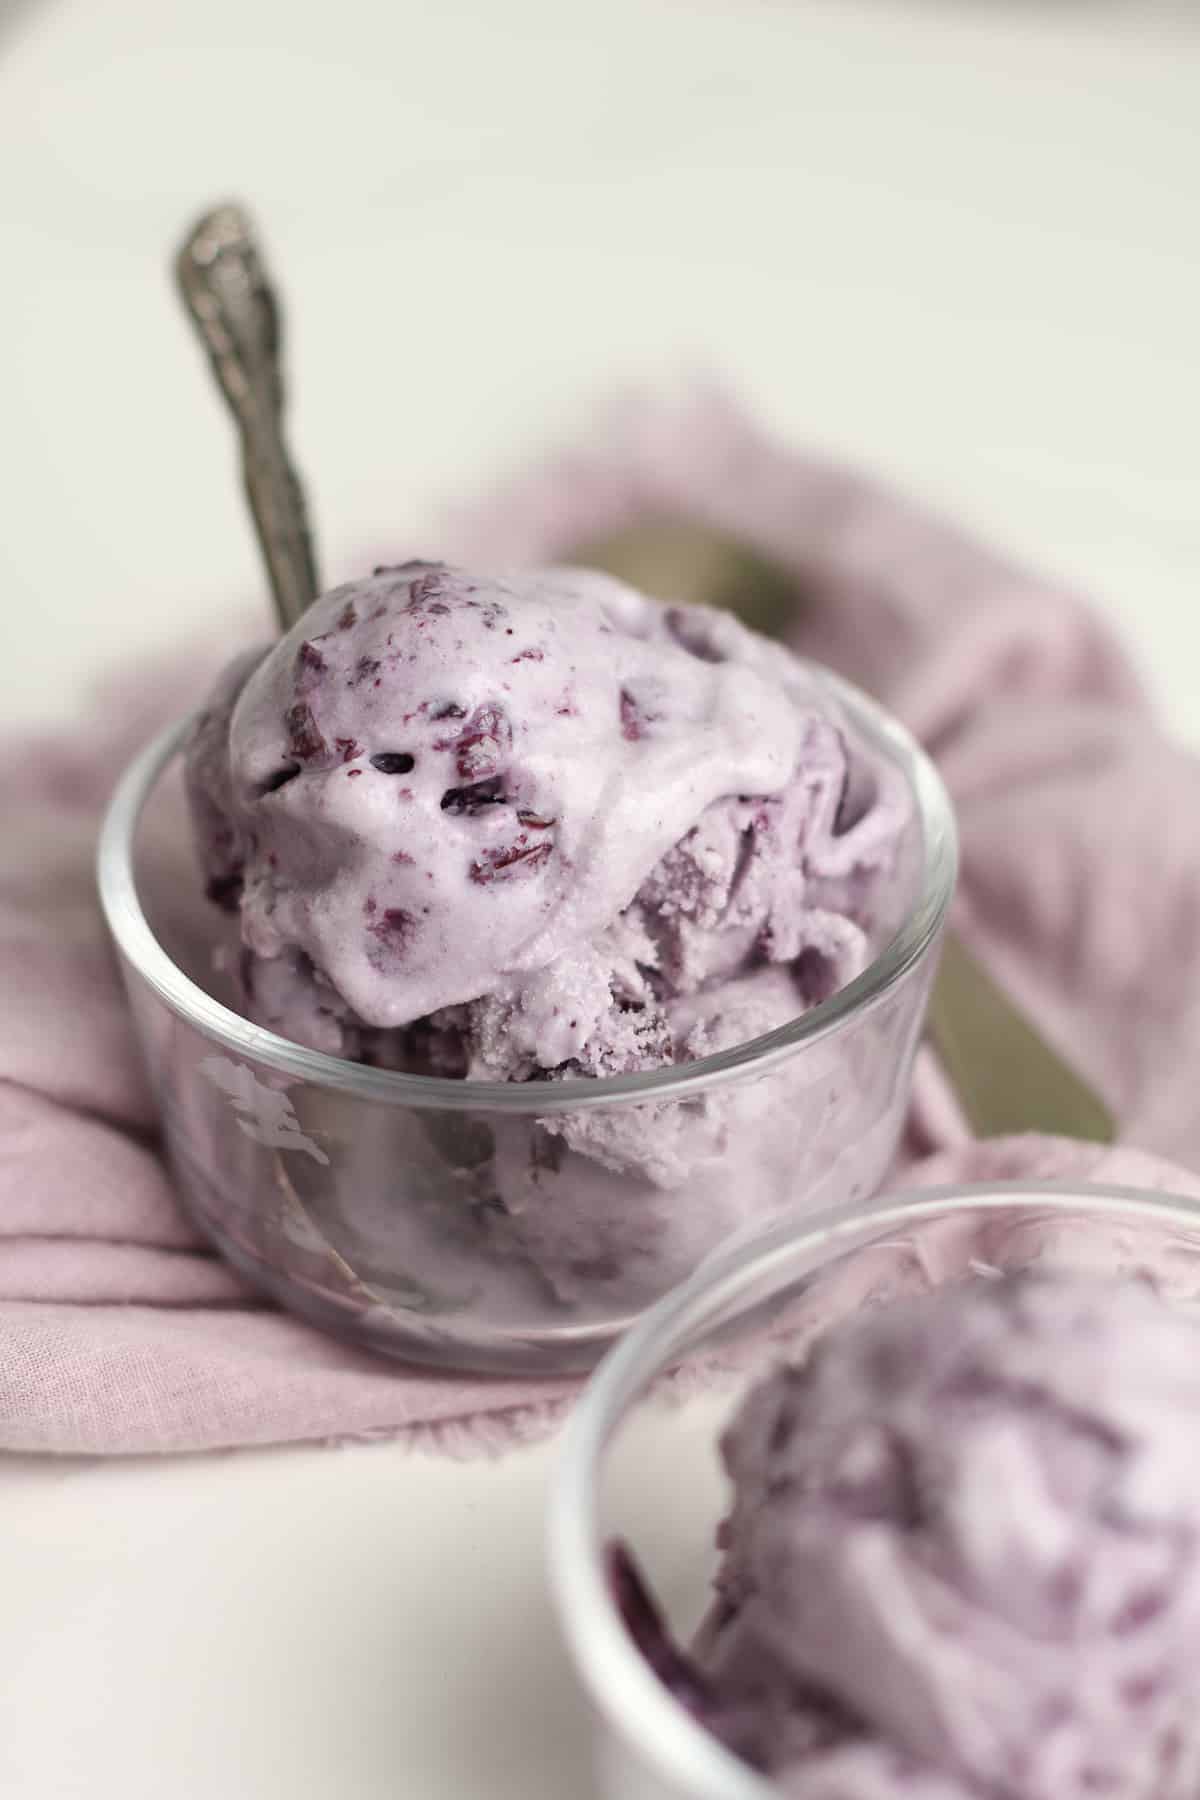 A drippy scoop of blueberry ice cream.